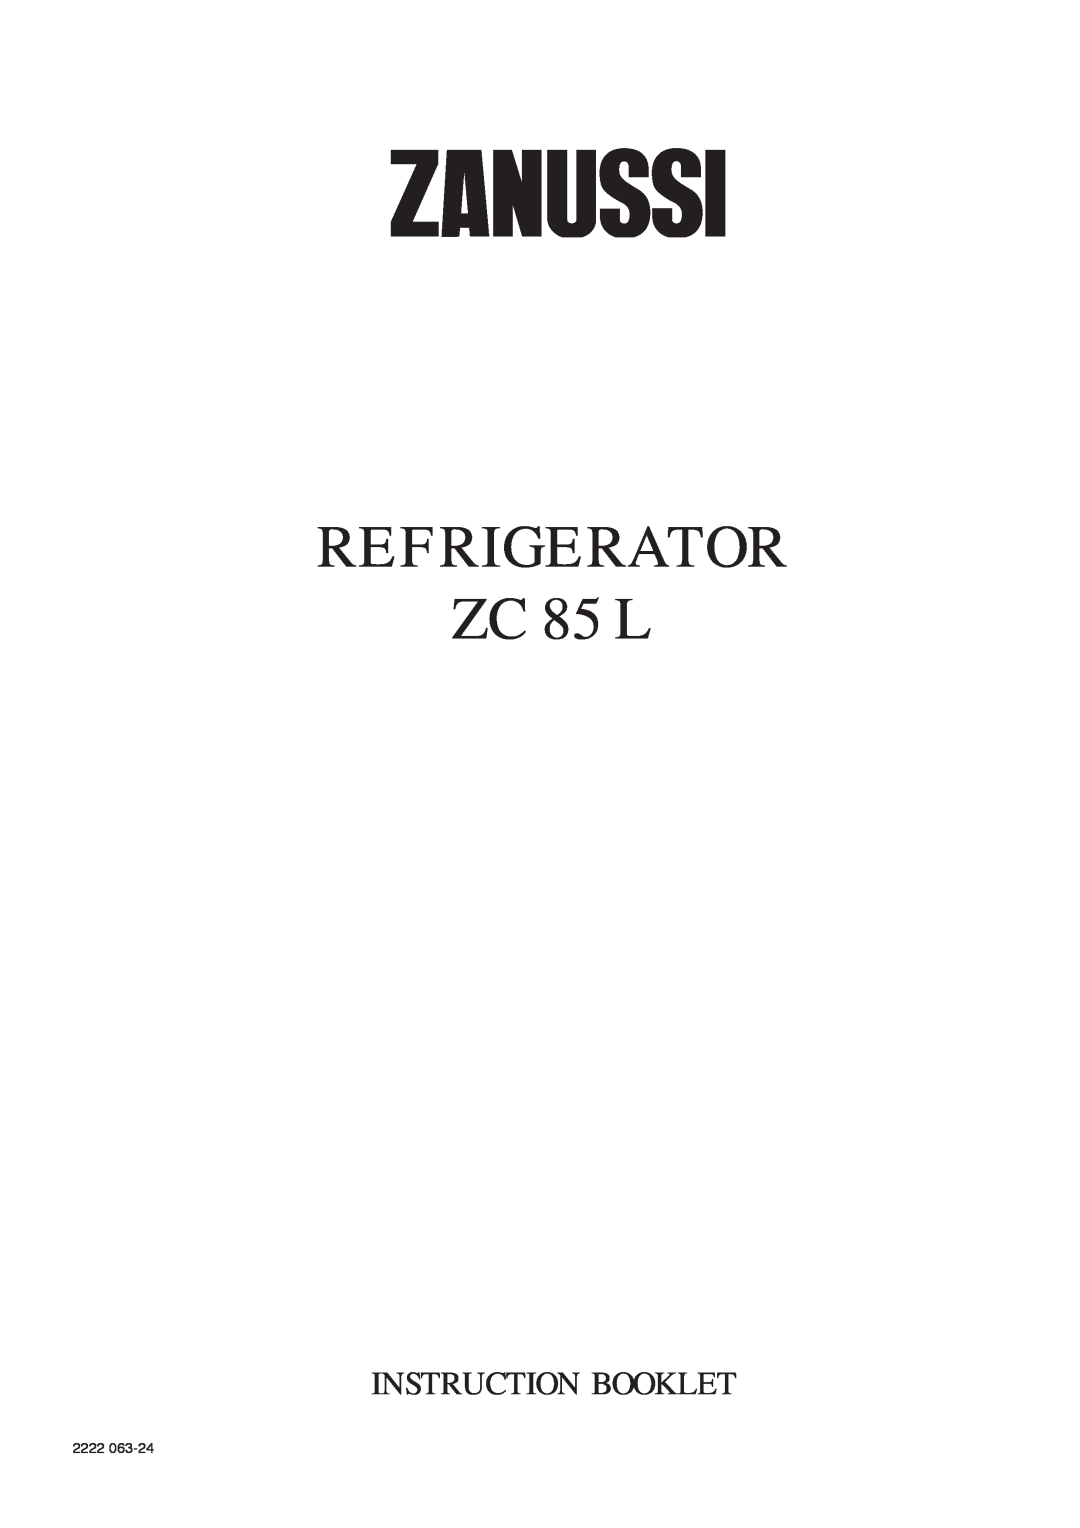 Zanussi manual REFRIGERATOR ZC 85 L, Instruction Booklet, 2222 